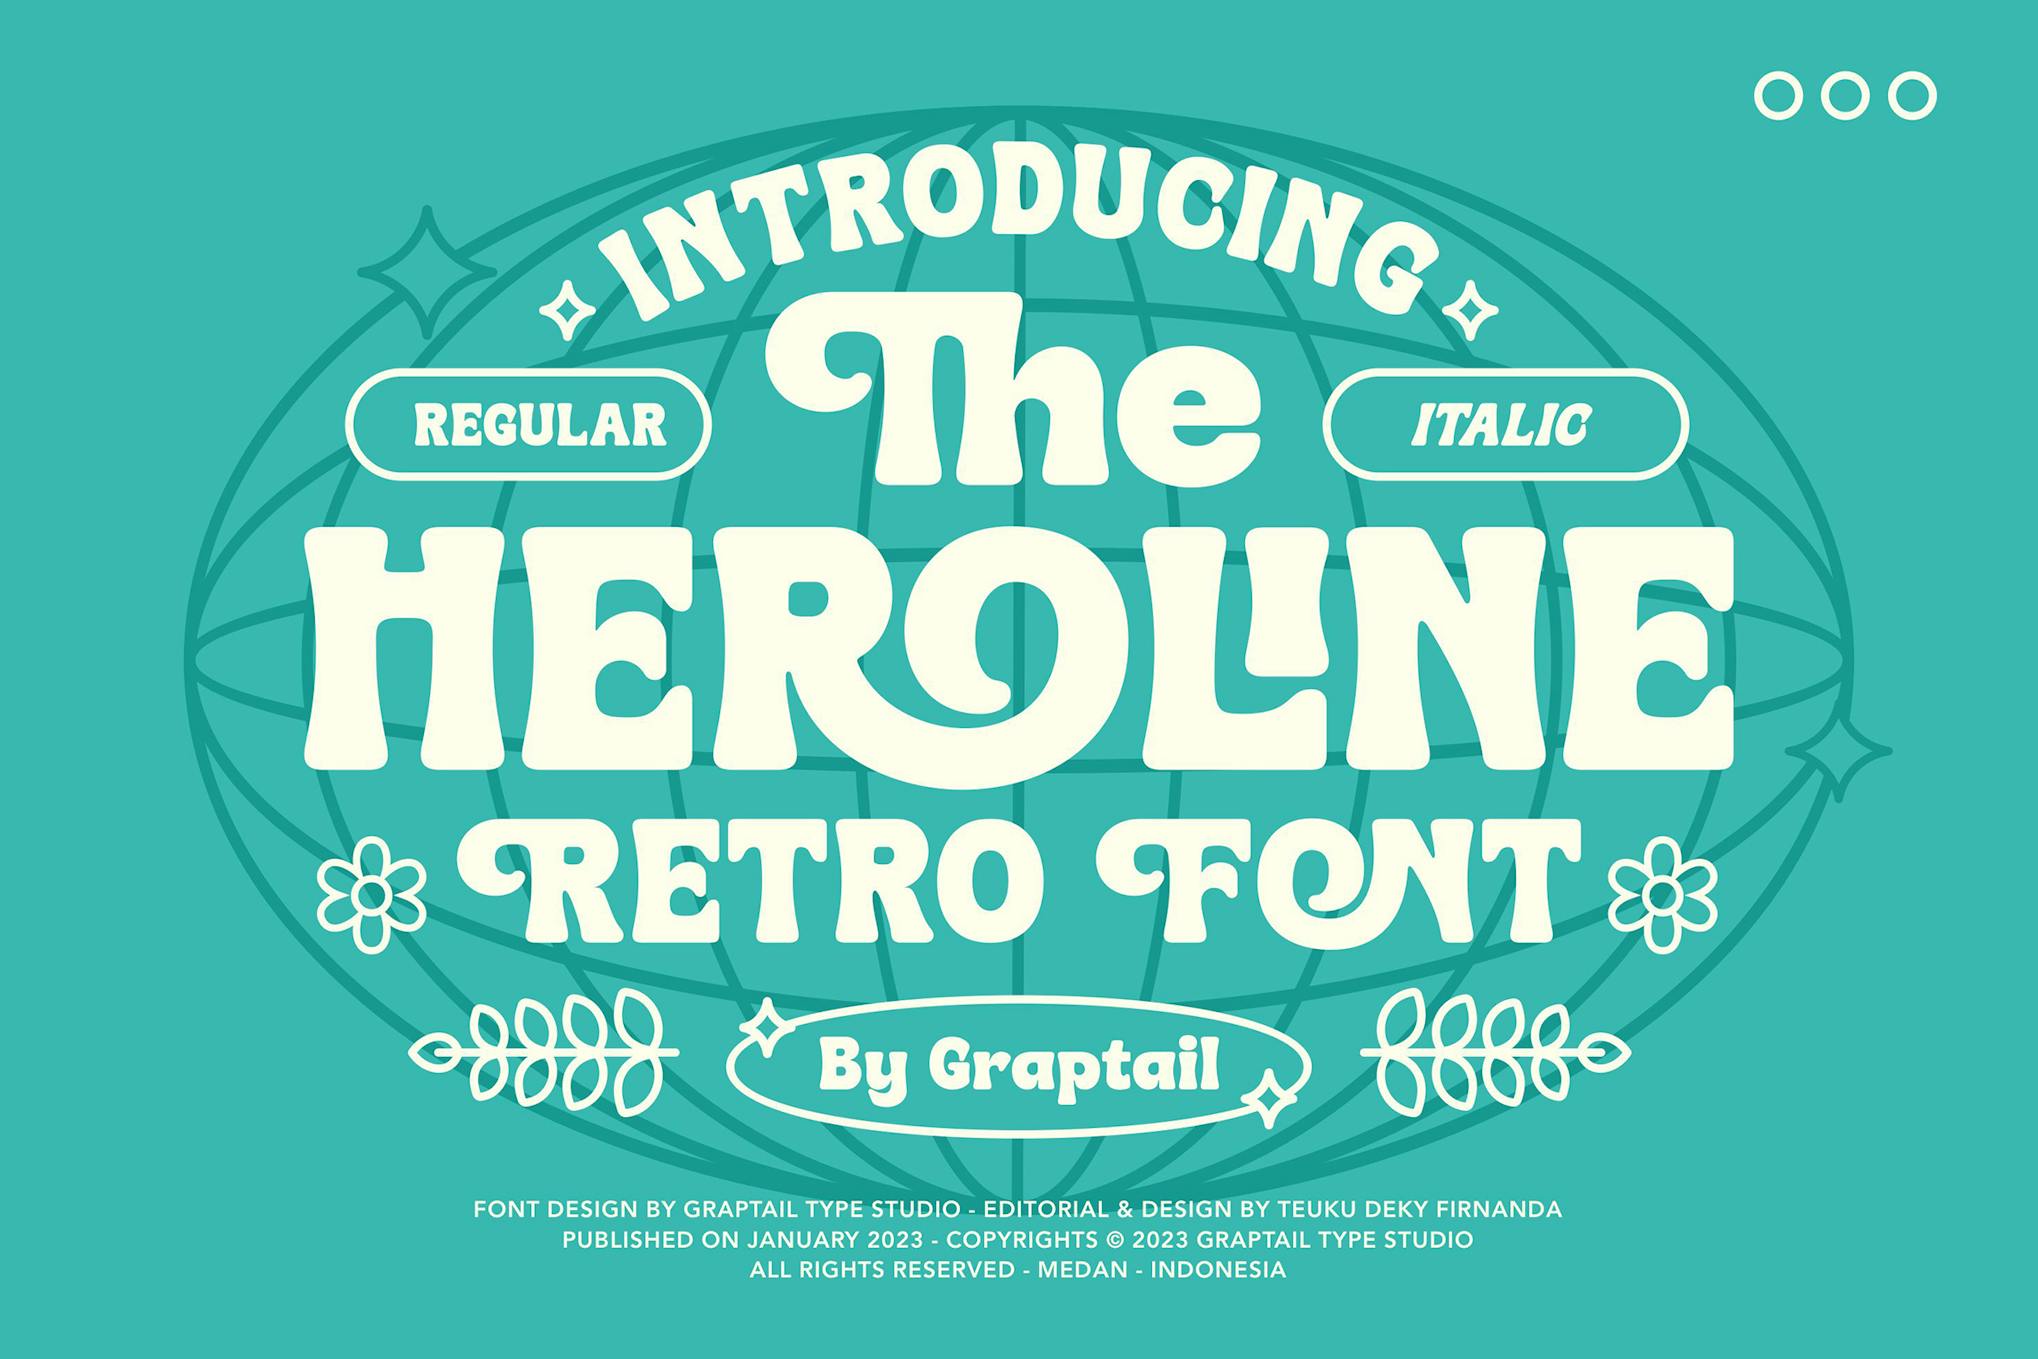 Heroline Retro Font